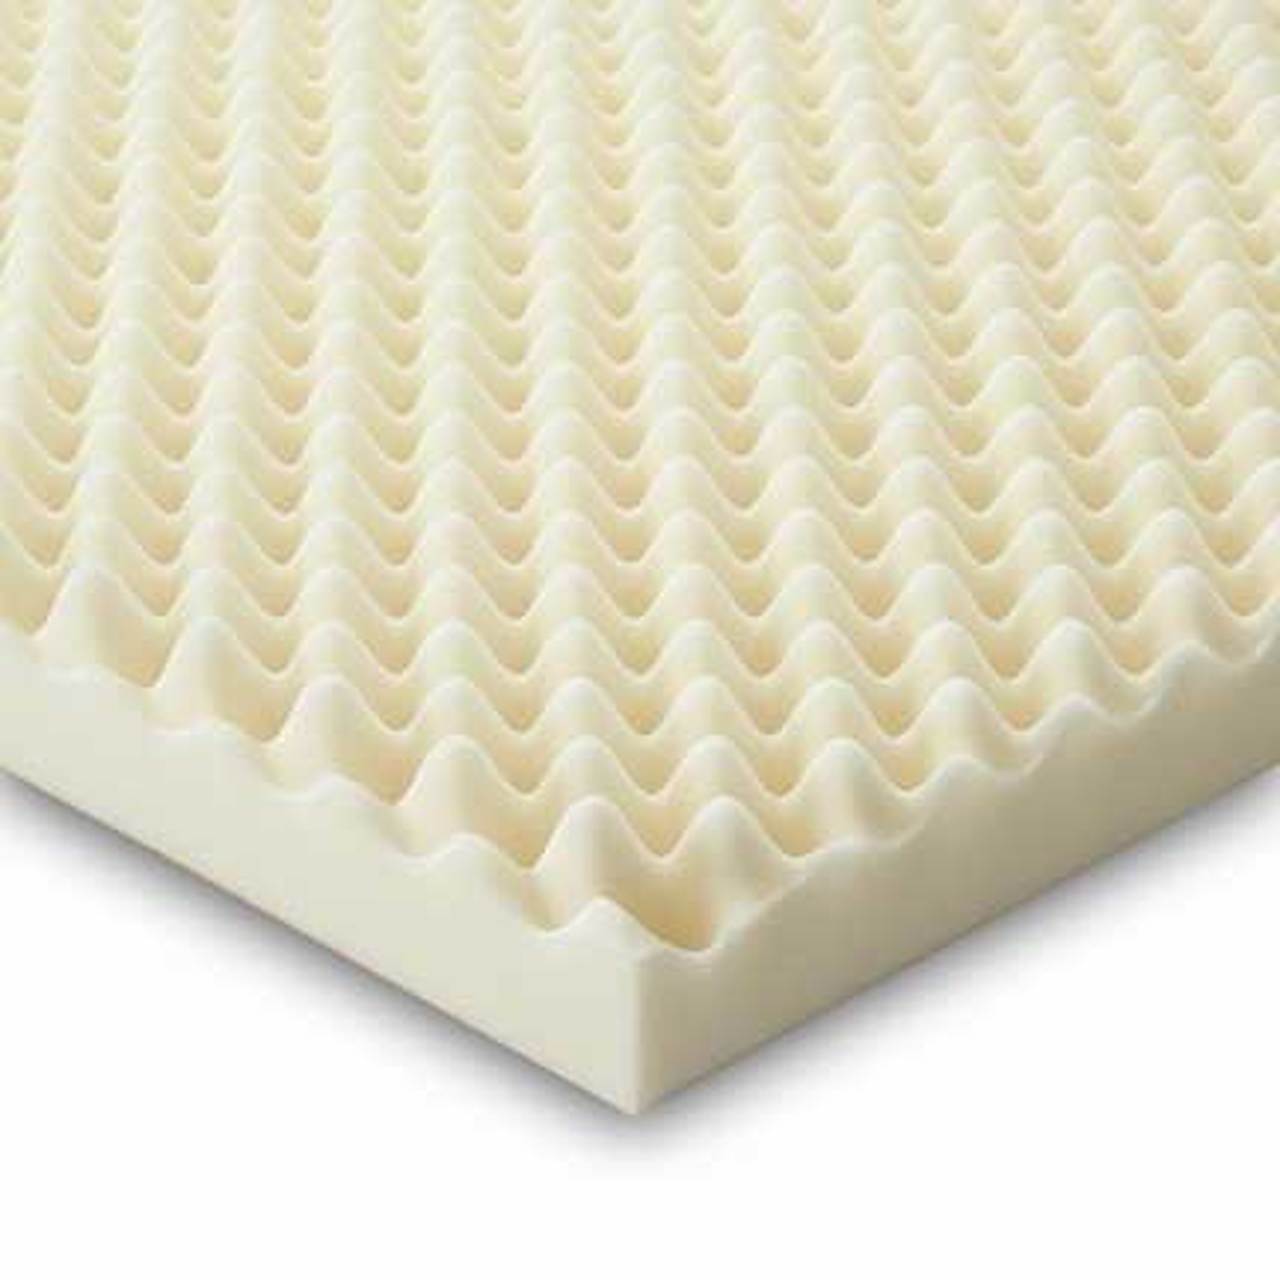 10FK-06 | Classic Brands 7 Inch High Density Foam Mattress - Medium Feel - Bed in a Box - 10-Year Warranty-4